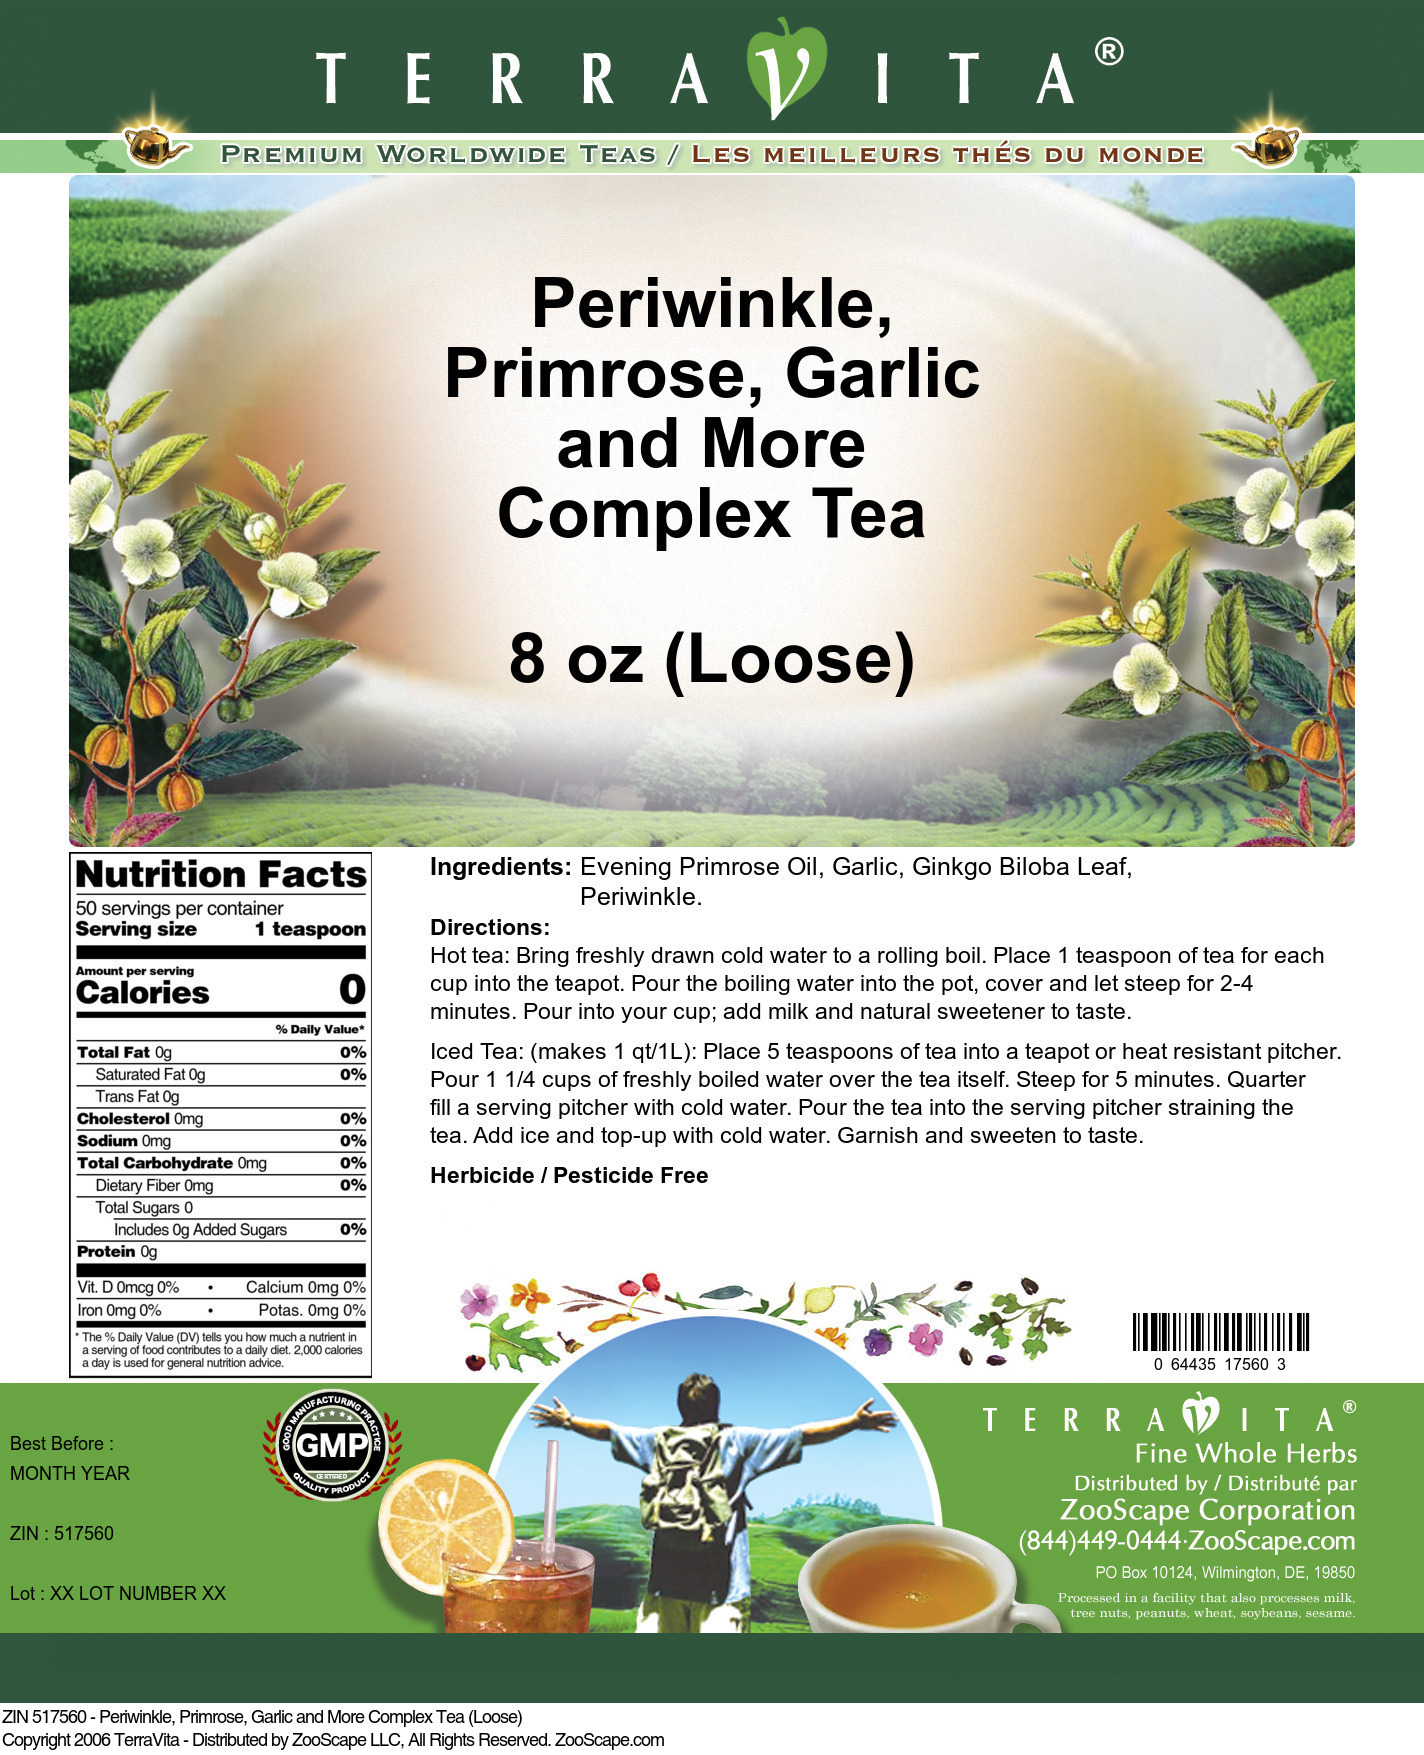 Periwinkle, Primrose, Garlic and More Complex Tea (Loose) - Label